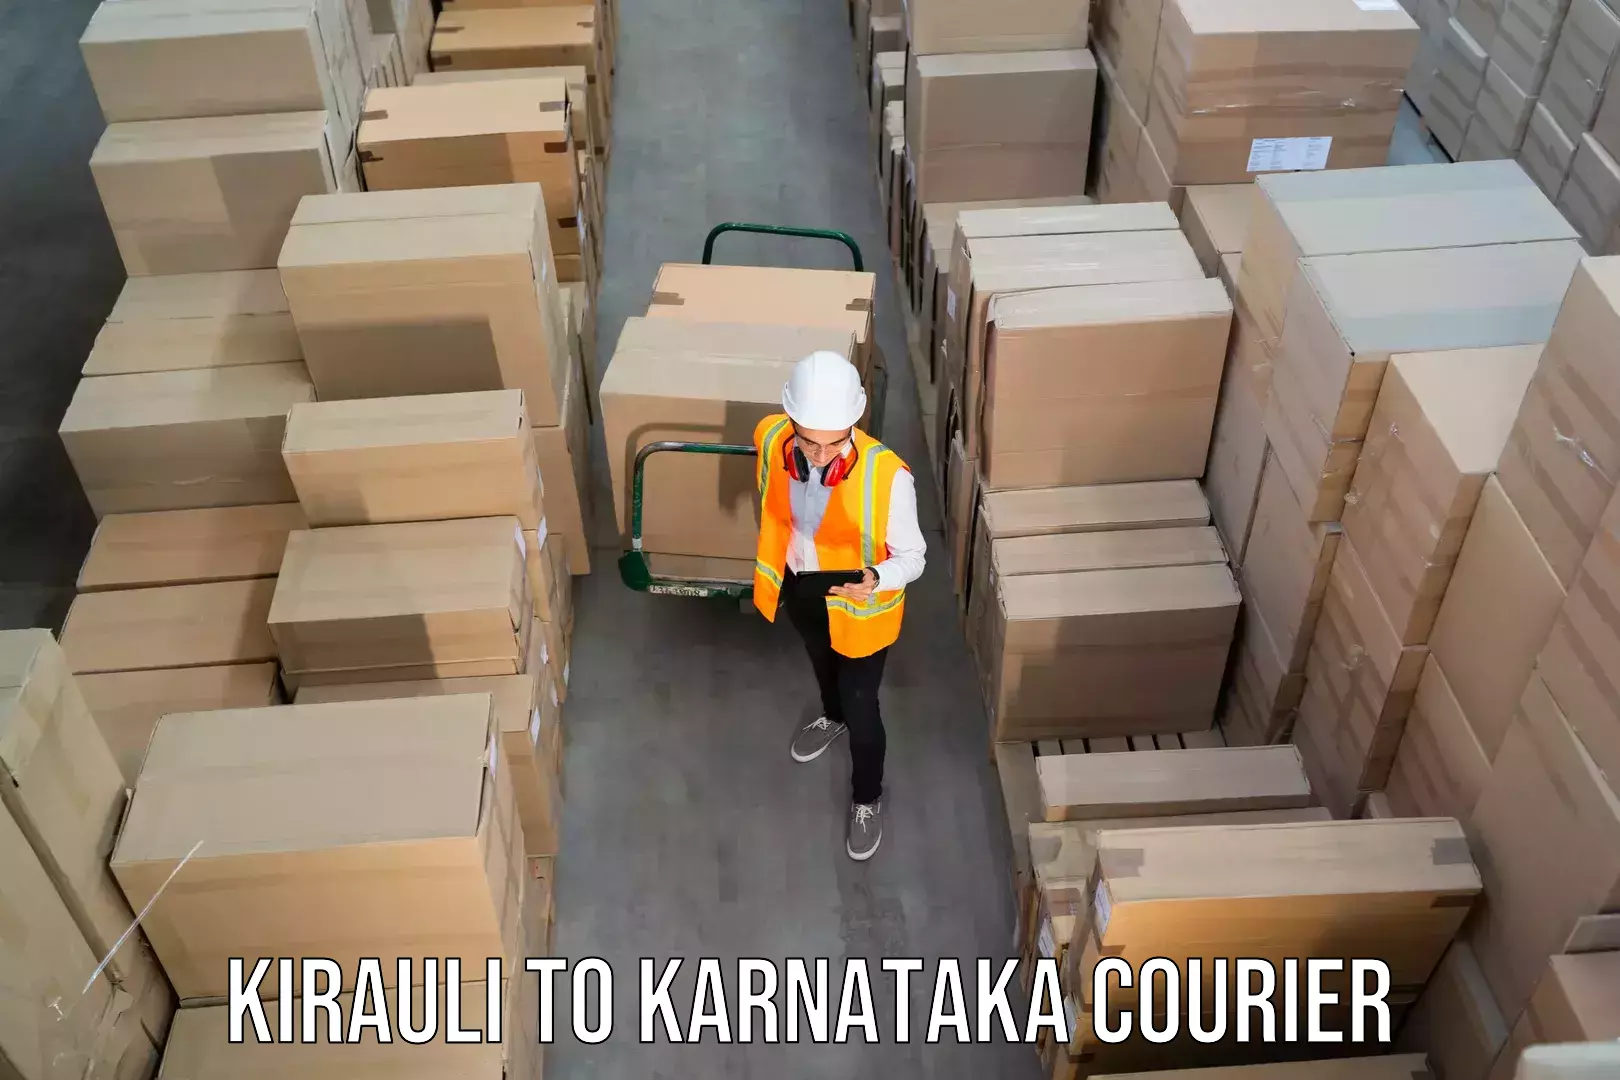 Round-the-clock parcel delivery Kirauli to Banavara